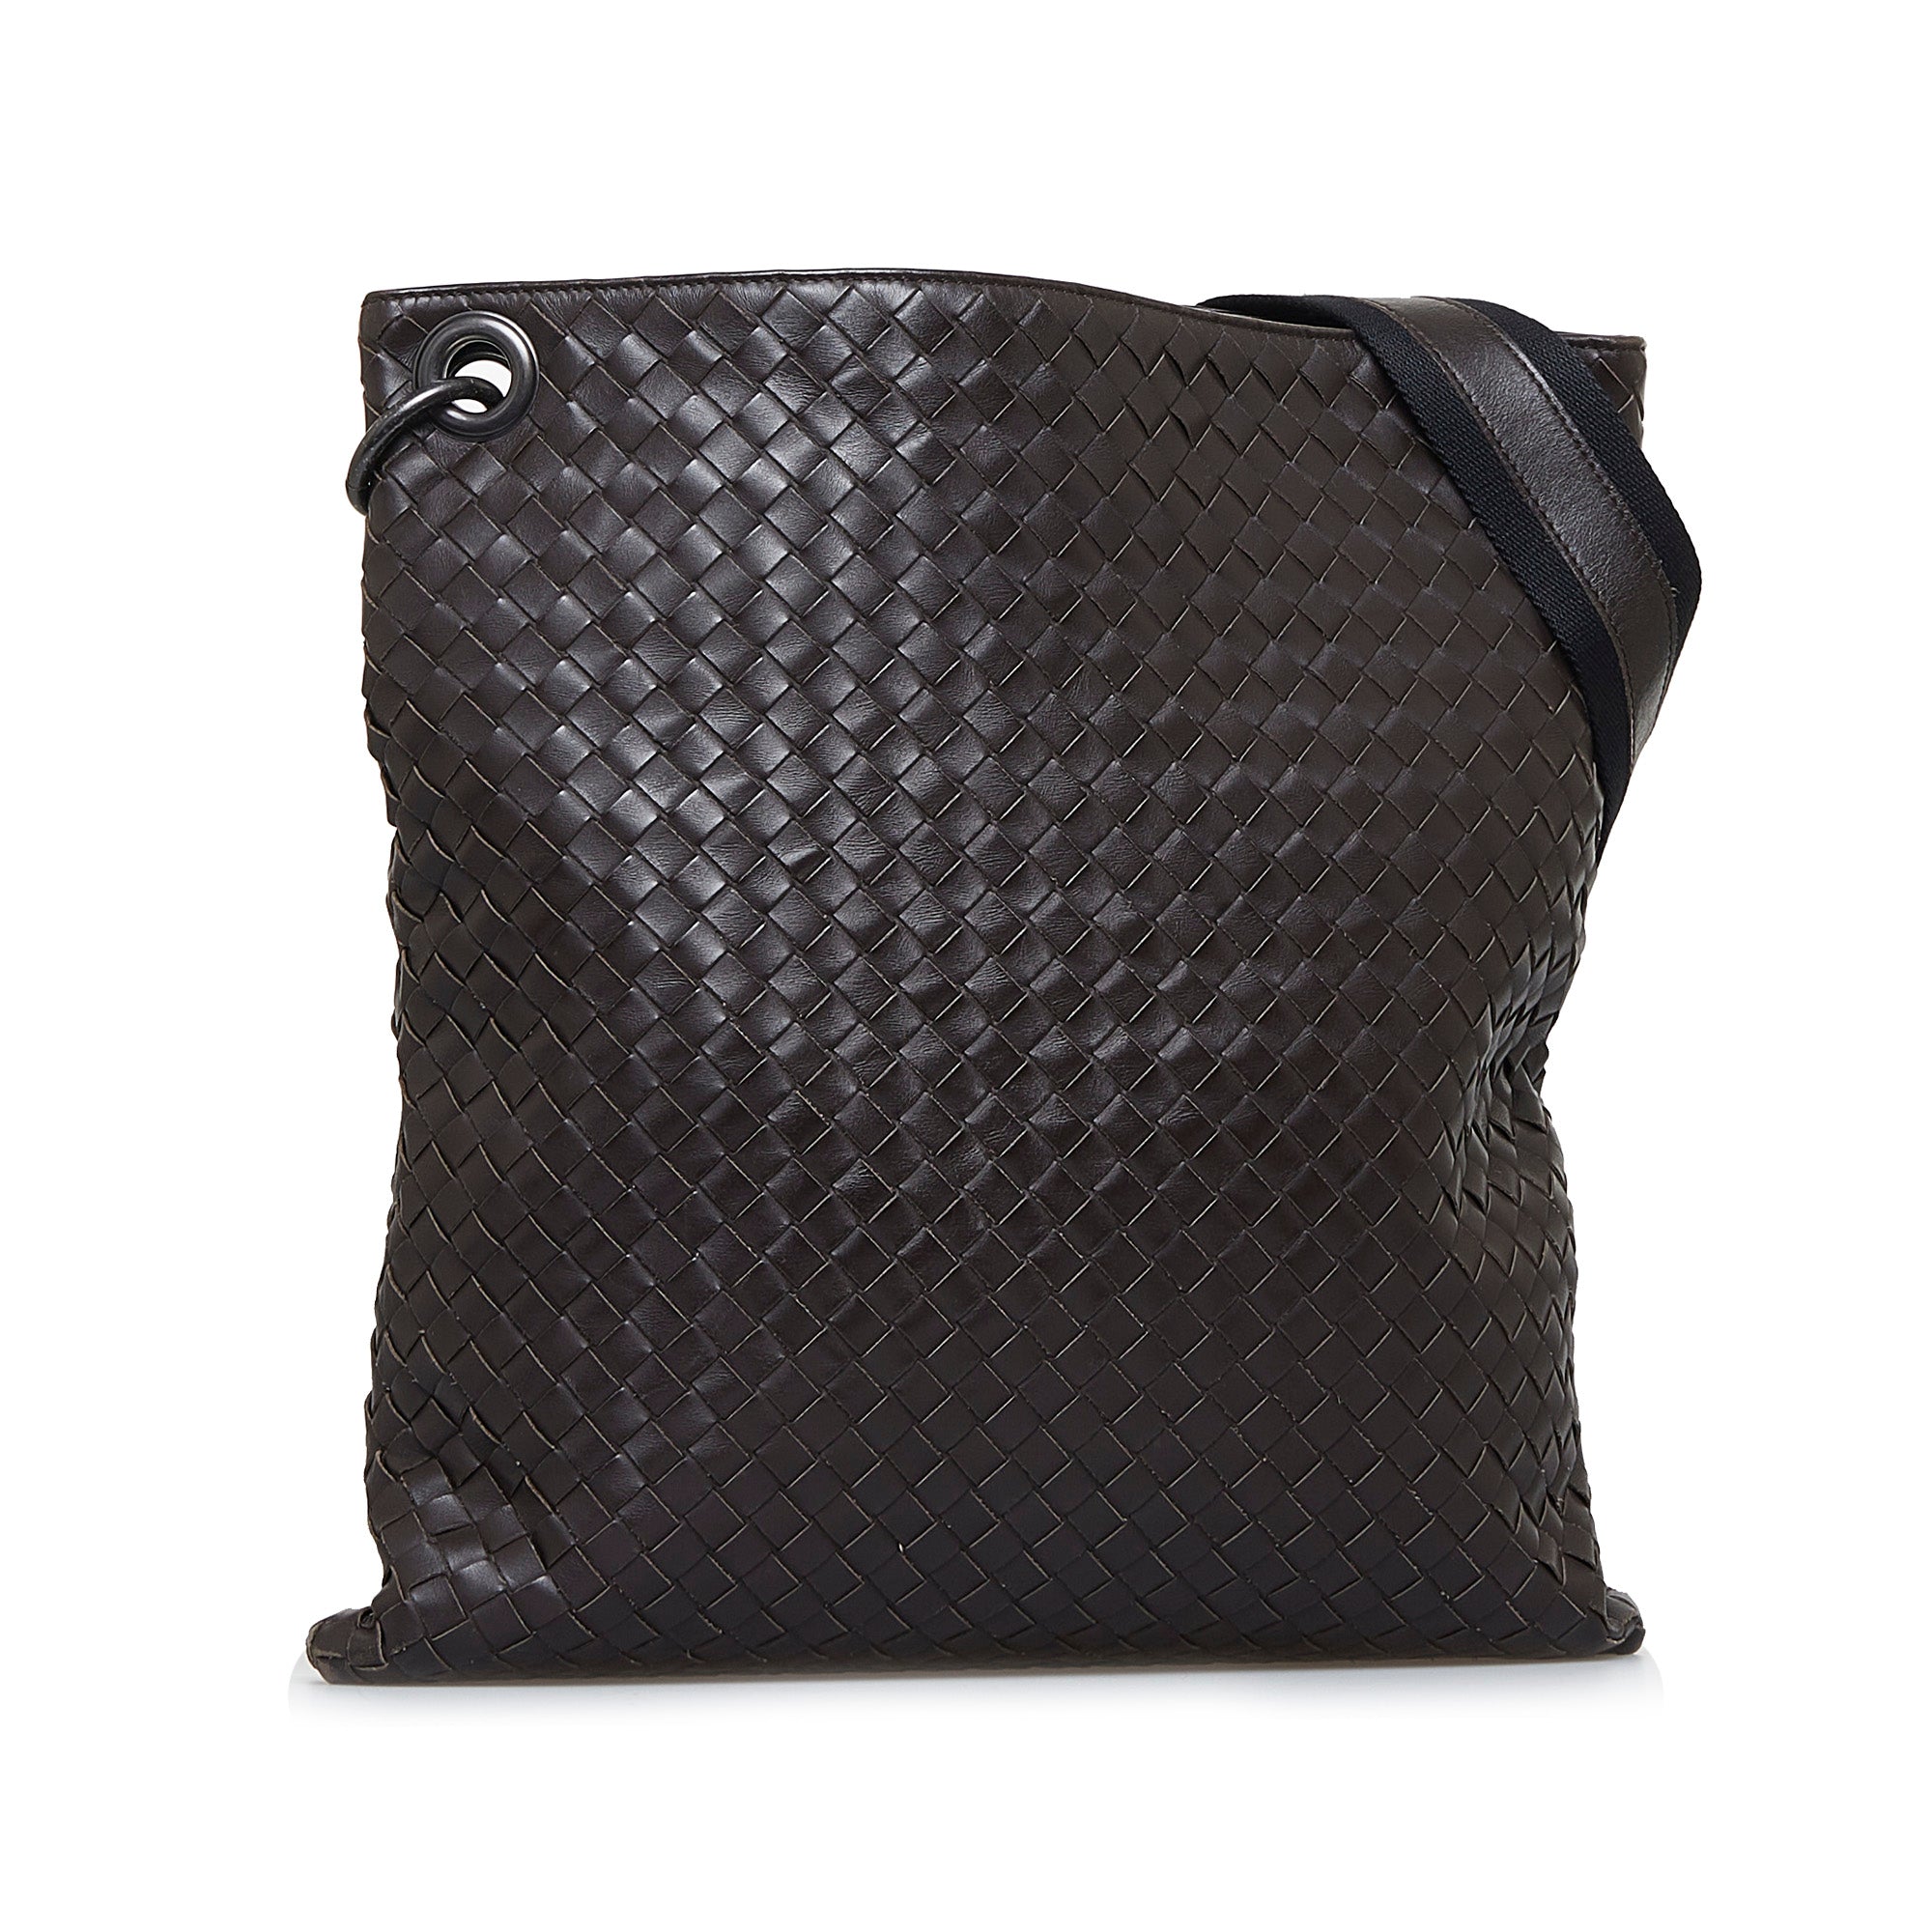 Bottega Veneta Silver Intrecciato Woven Leather Tote Shoulder Bag